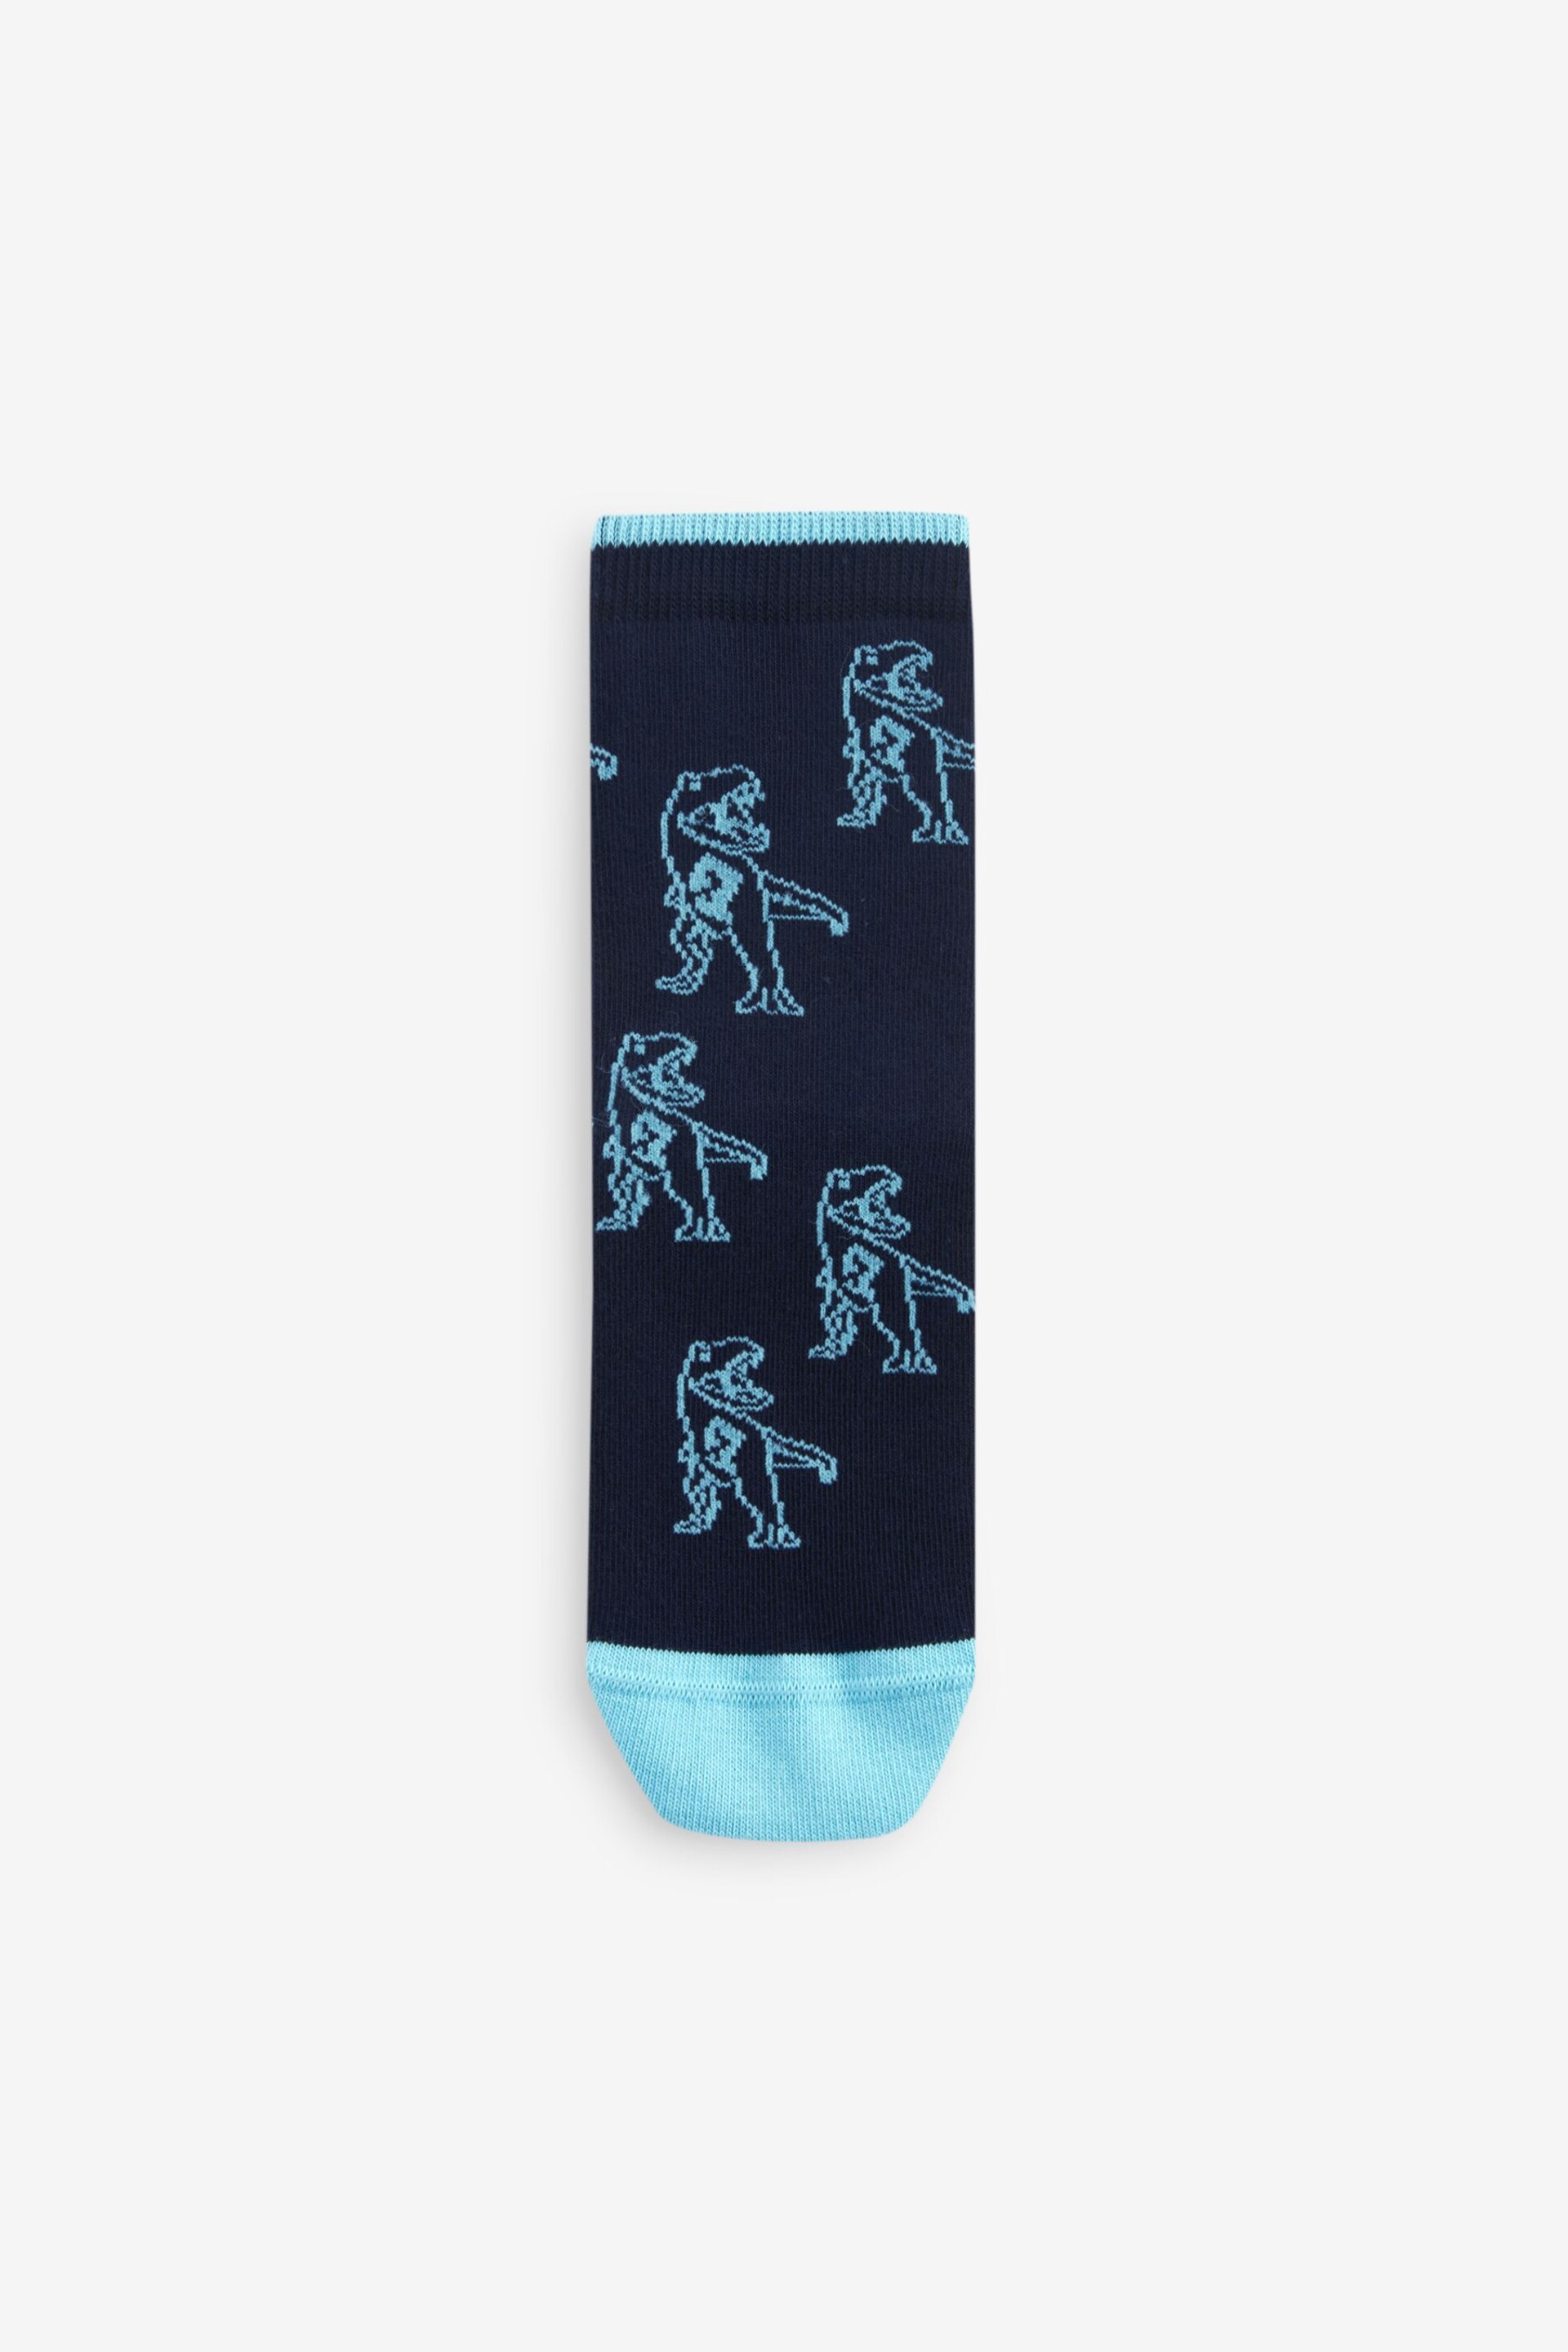 Blue/Green Fluro Dinosaurs Cotton Rich Socks 5 Pack - Image 4 of 6